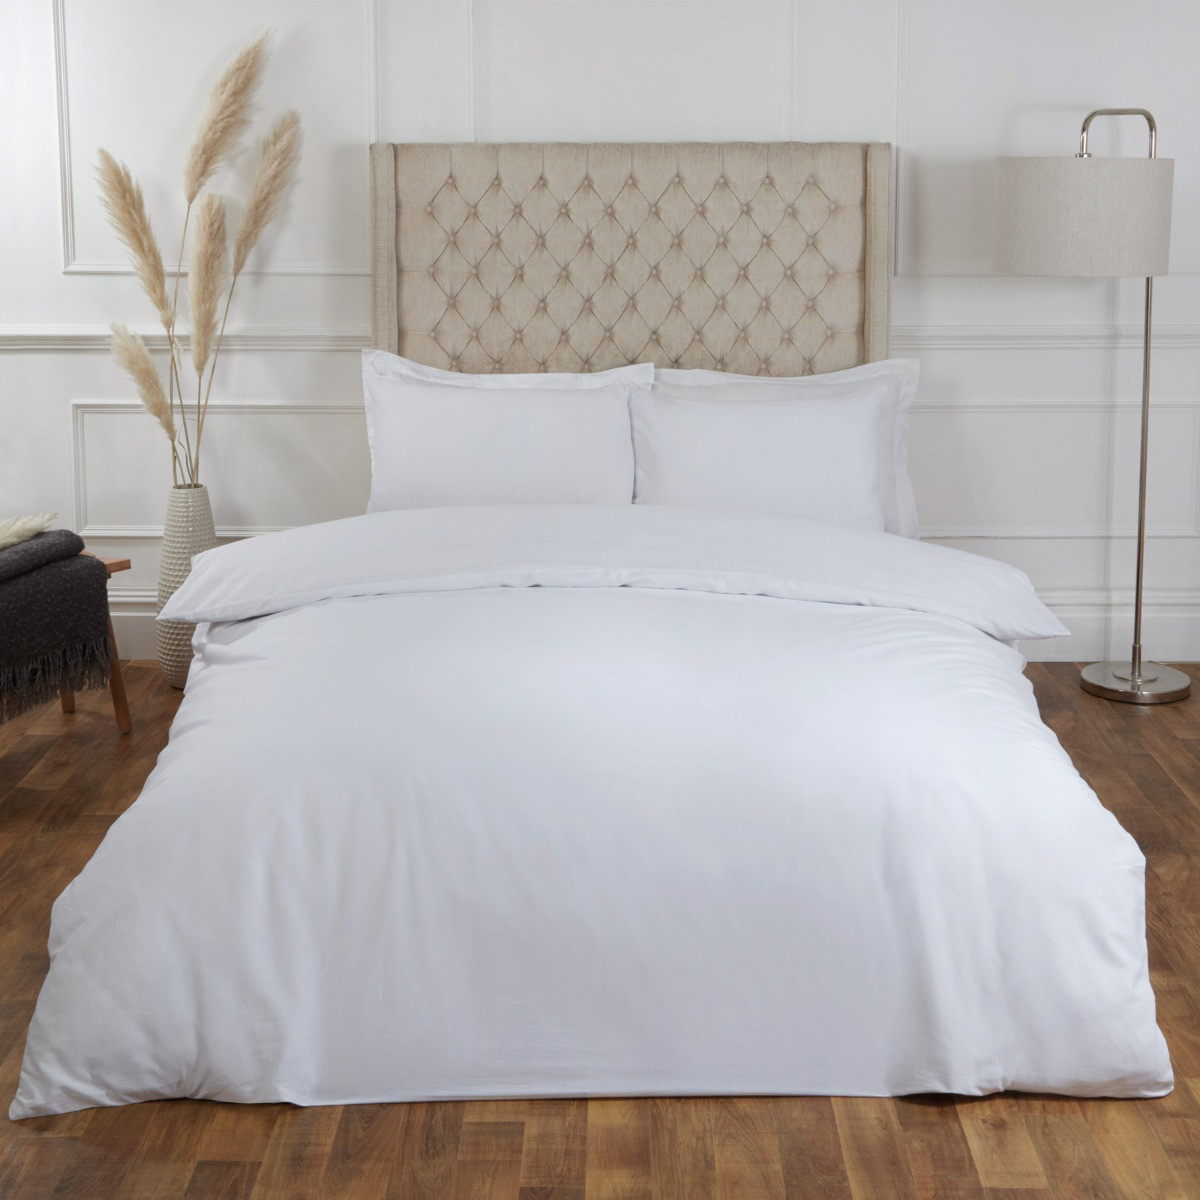 Highams Plain 100% Cotton Duvet Cover with Pillow Case Bedding Set, White - King>